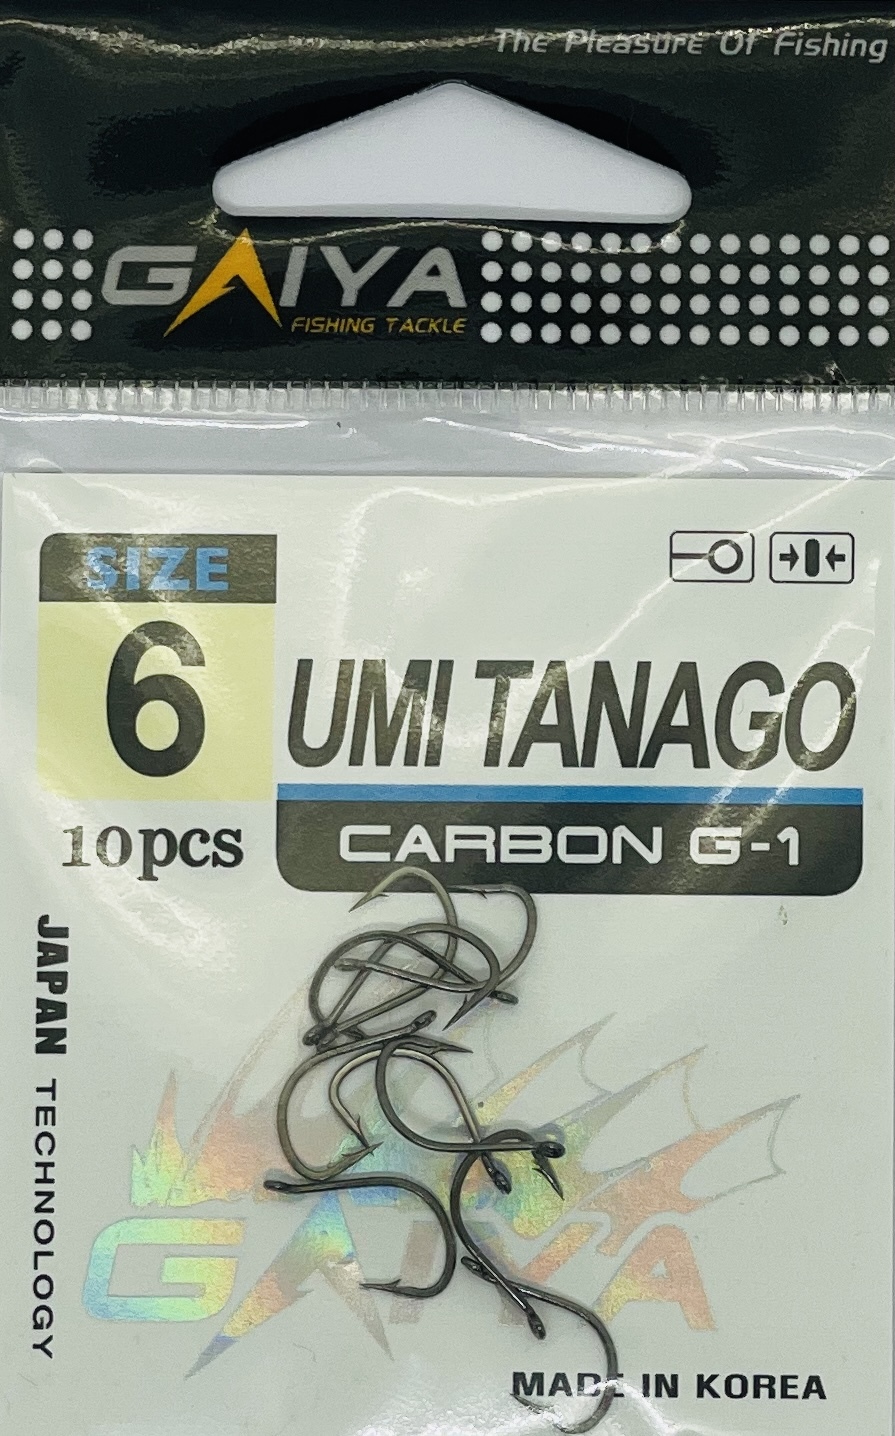 Крючки GAIYA UMI TANAGO размер 6, 10 шт.